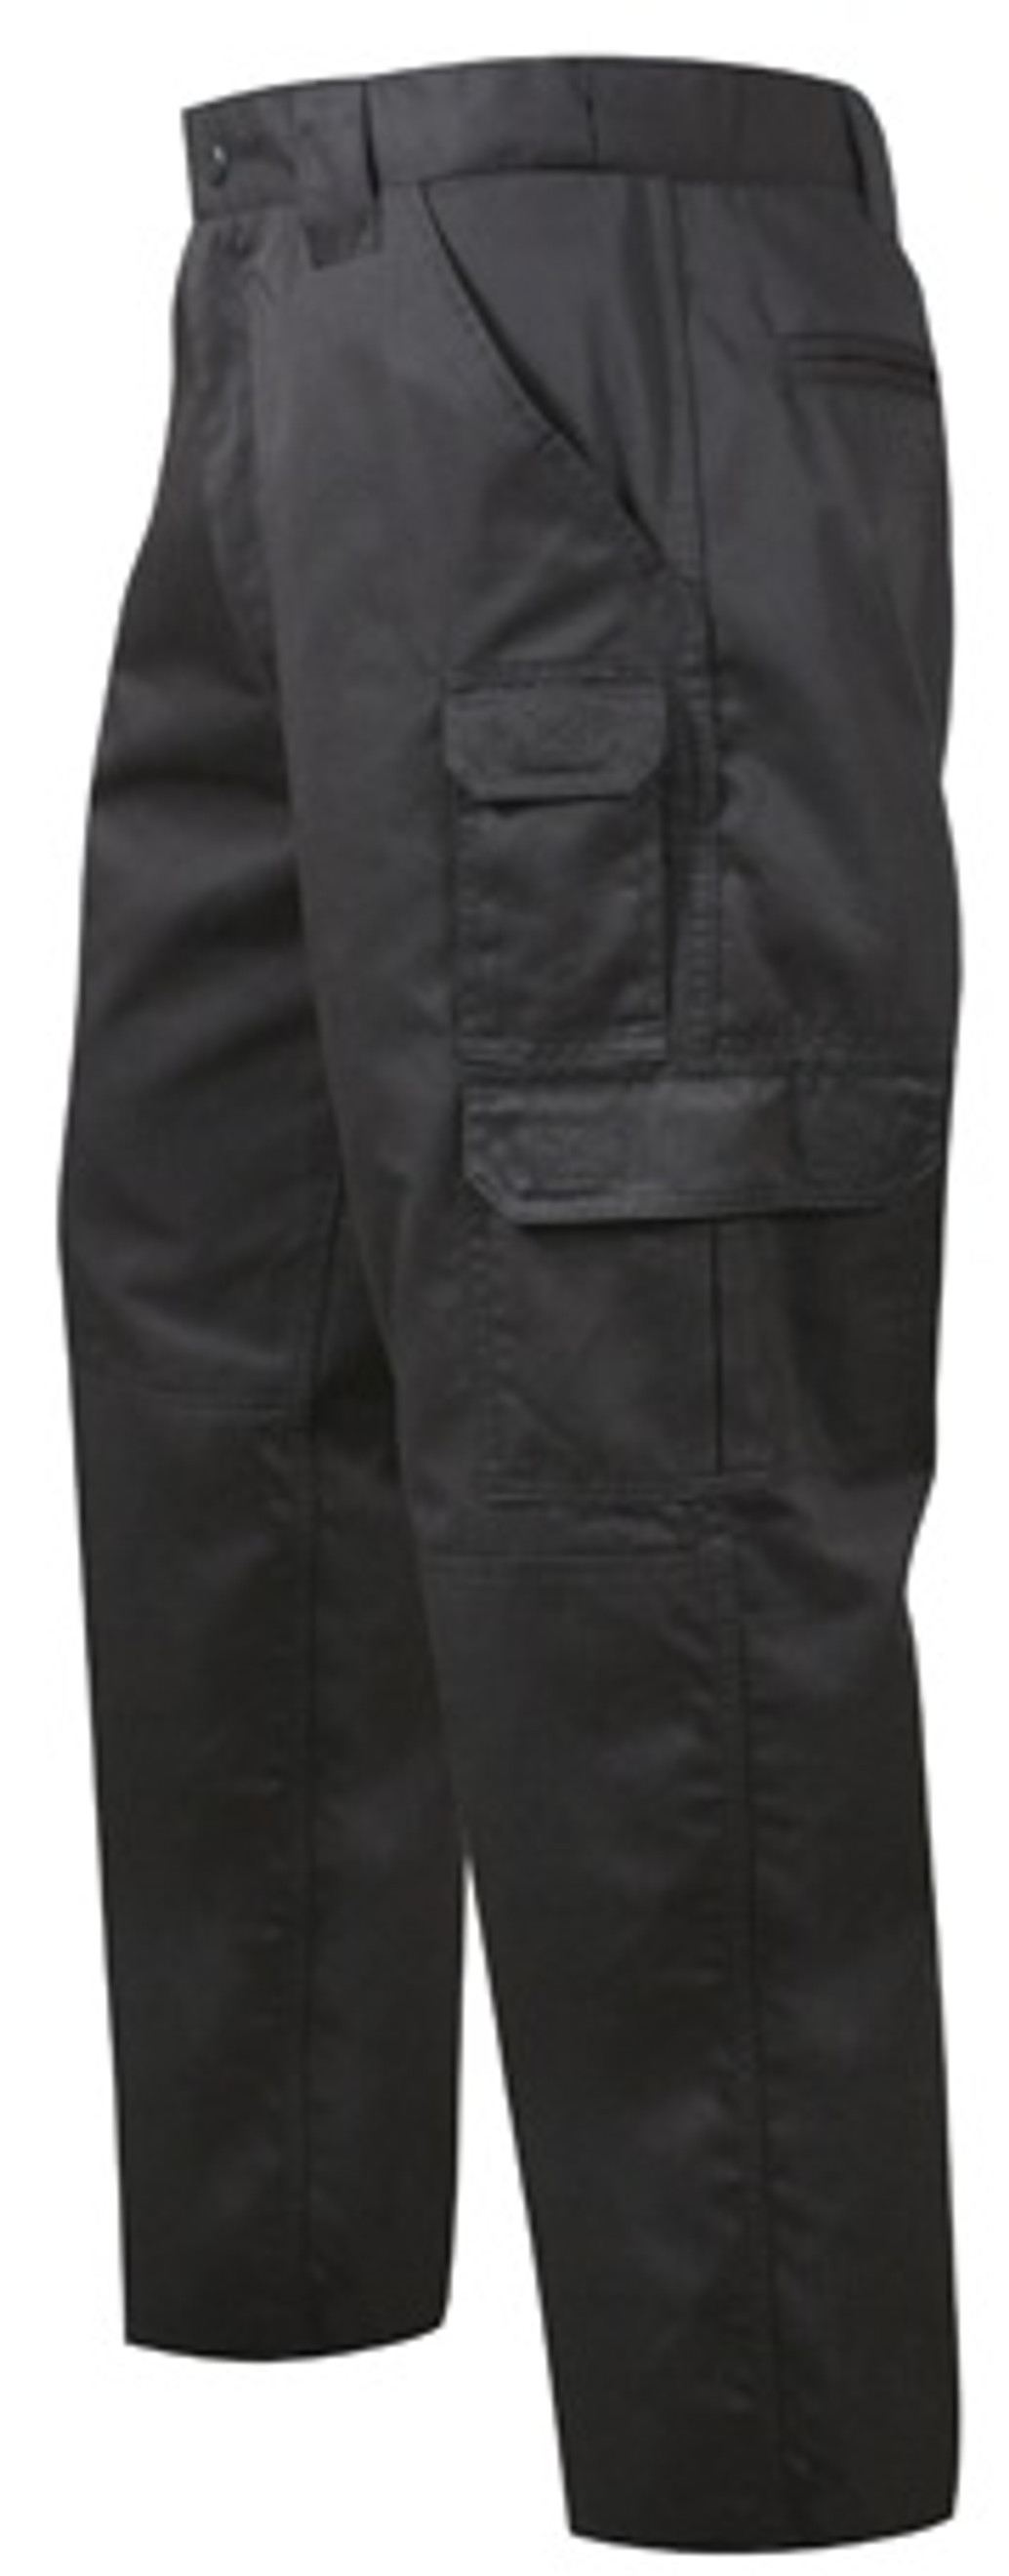 Rothco R/S Tactical Duty Pants - Black